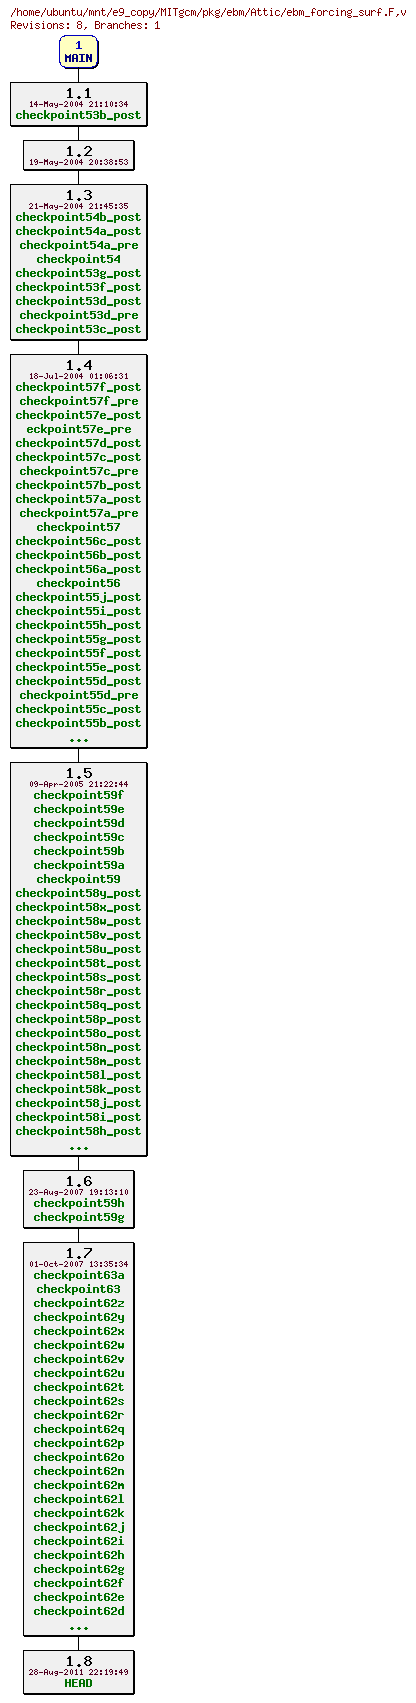 Revisions of MITgcm/pkg/ebm/ebm_forcing_surf.F